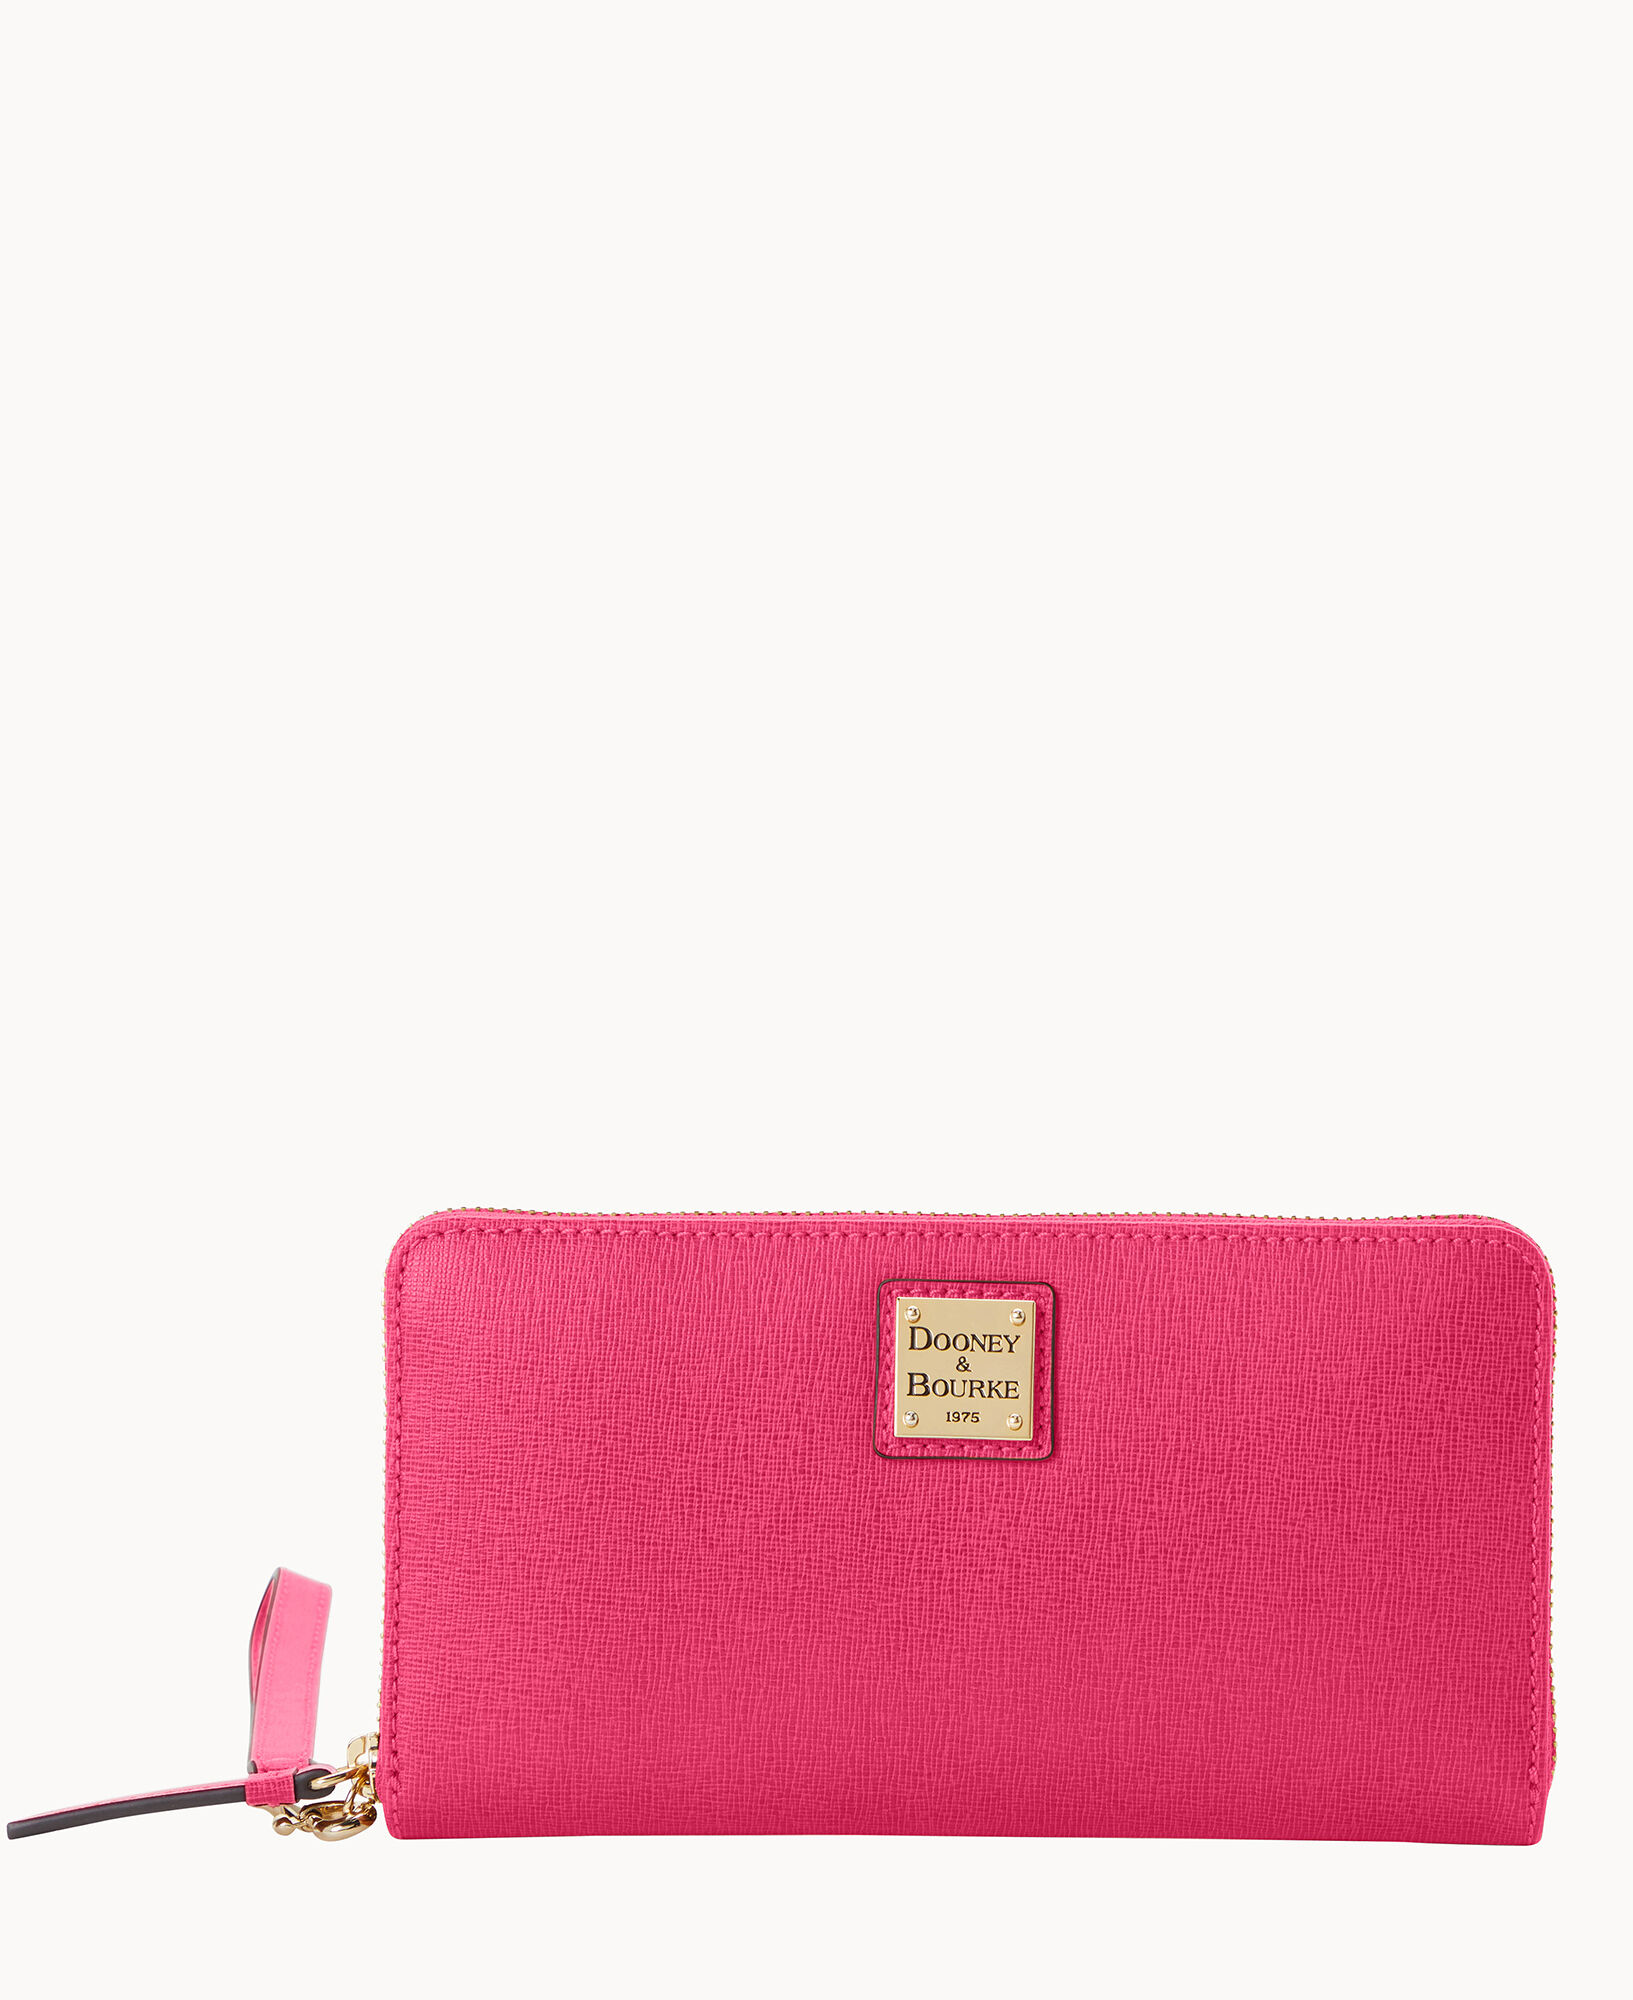 Dooney & Bourke Saffiano II Small Zip Crossbody (Cranberry) Handbags -  Yahoo Shopping